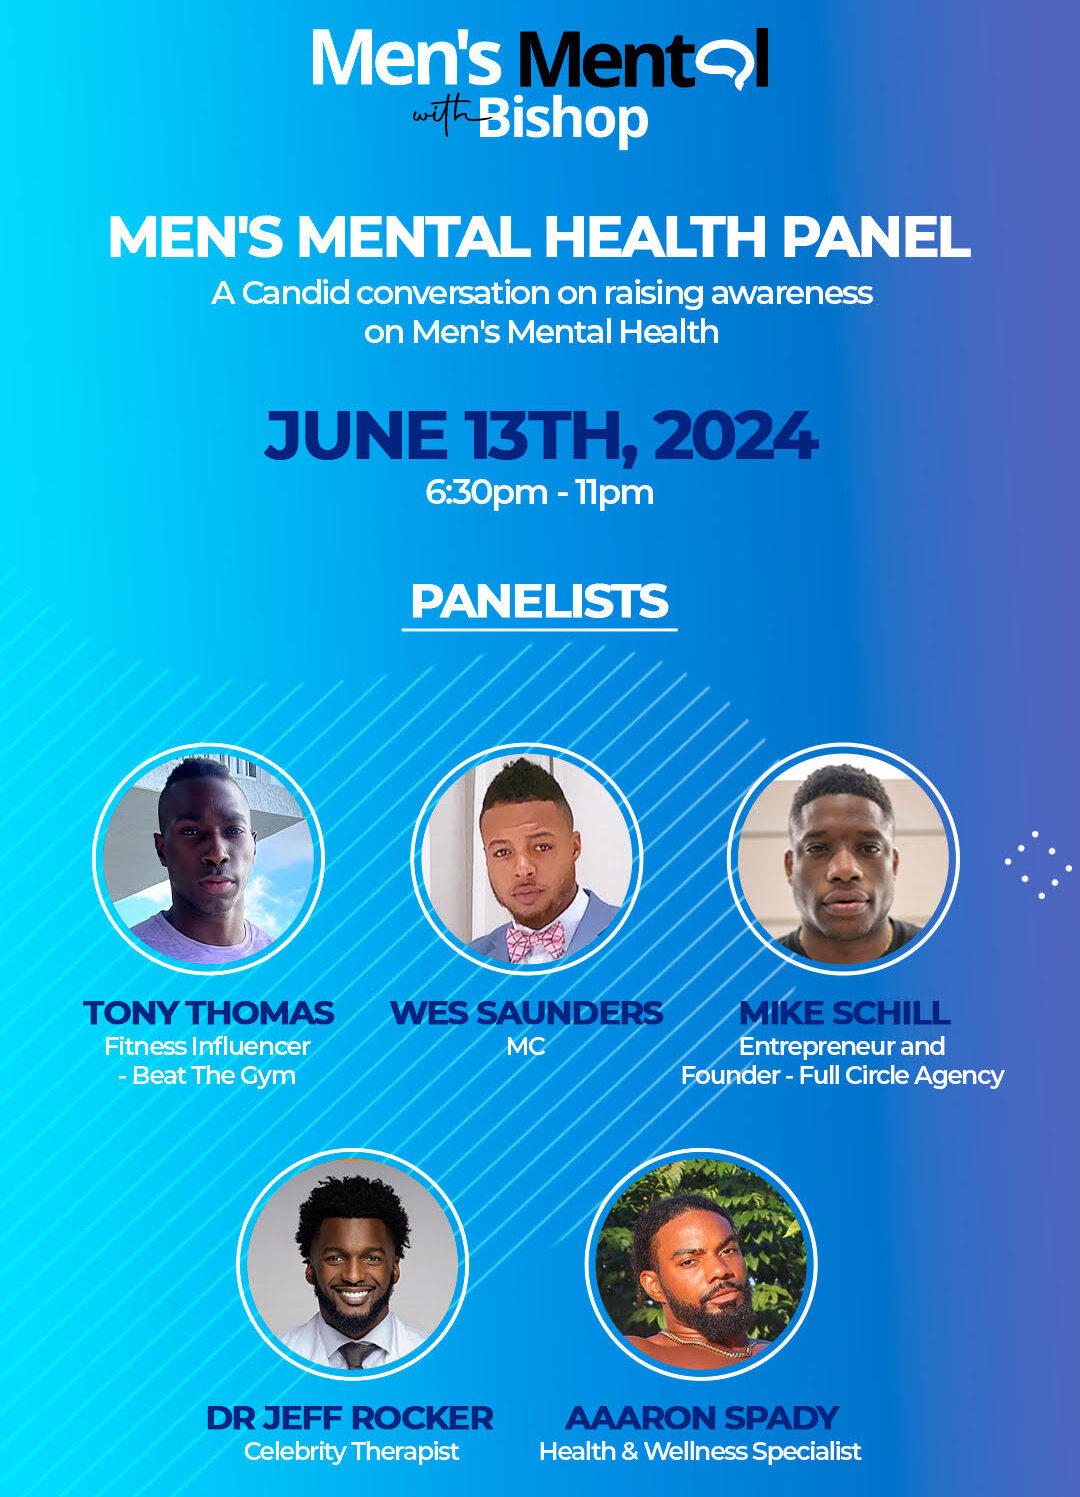 Men's Mental Health with Bishop Panel Event